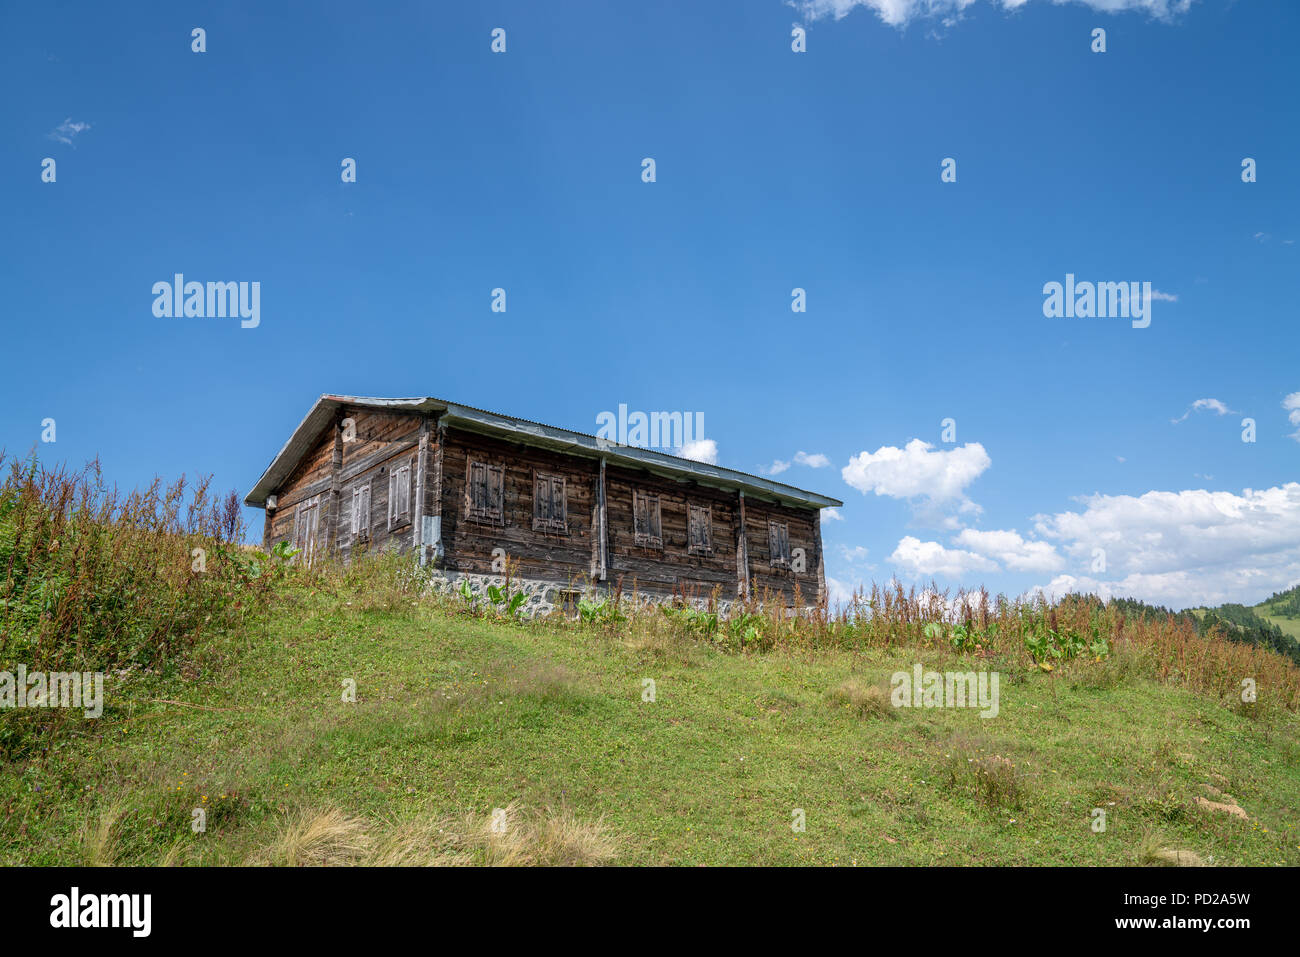 Holz- alten Bungalow Haus in grüner Natur. Rize, Türkei. Stockfoto